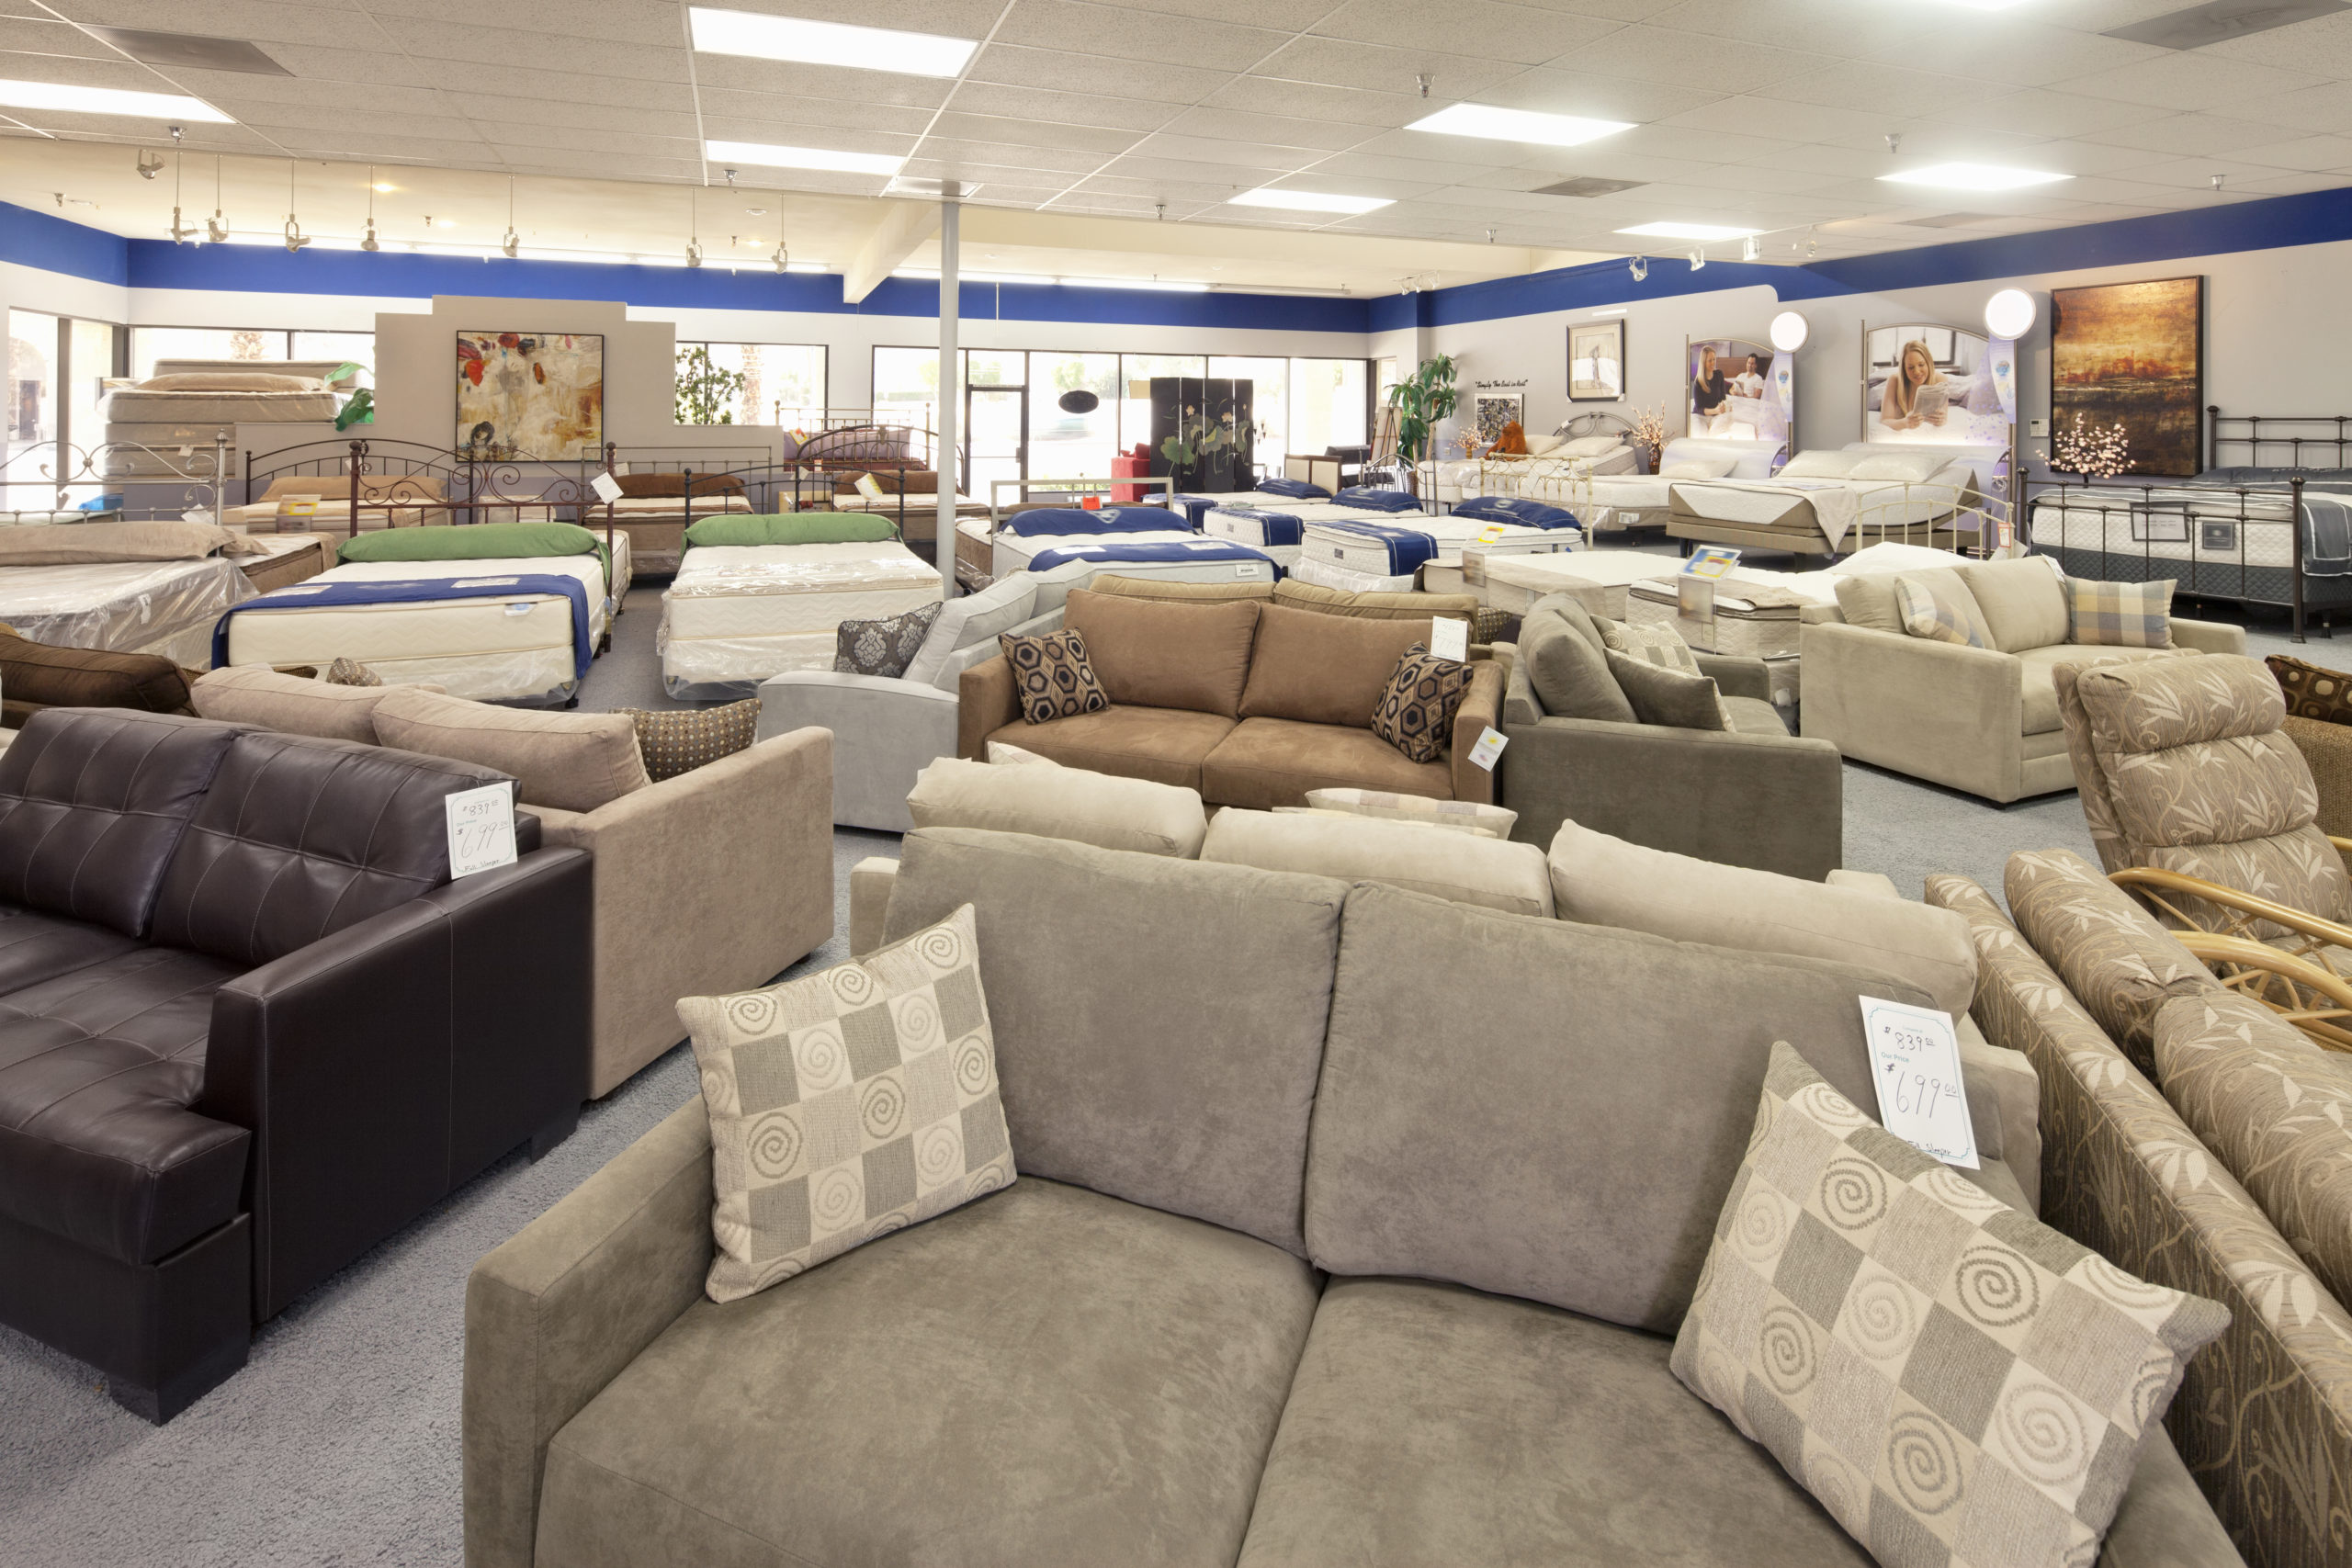 Find the Best Furniture Store in Garland at Furniture Empire